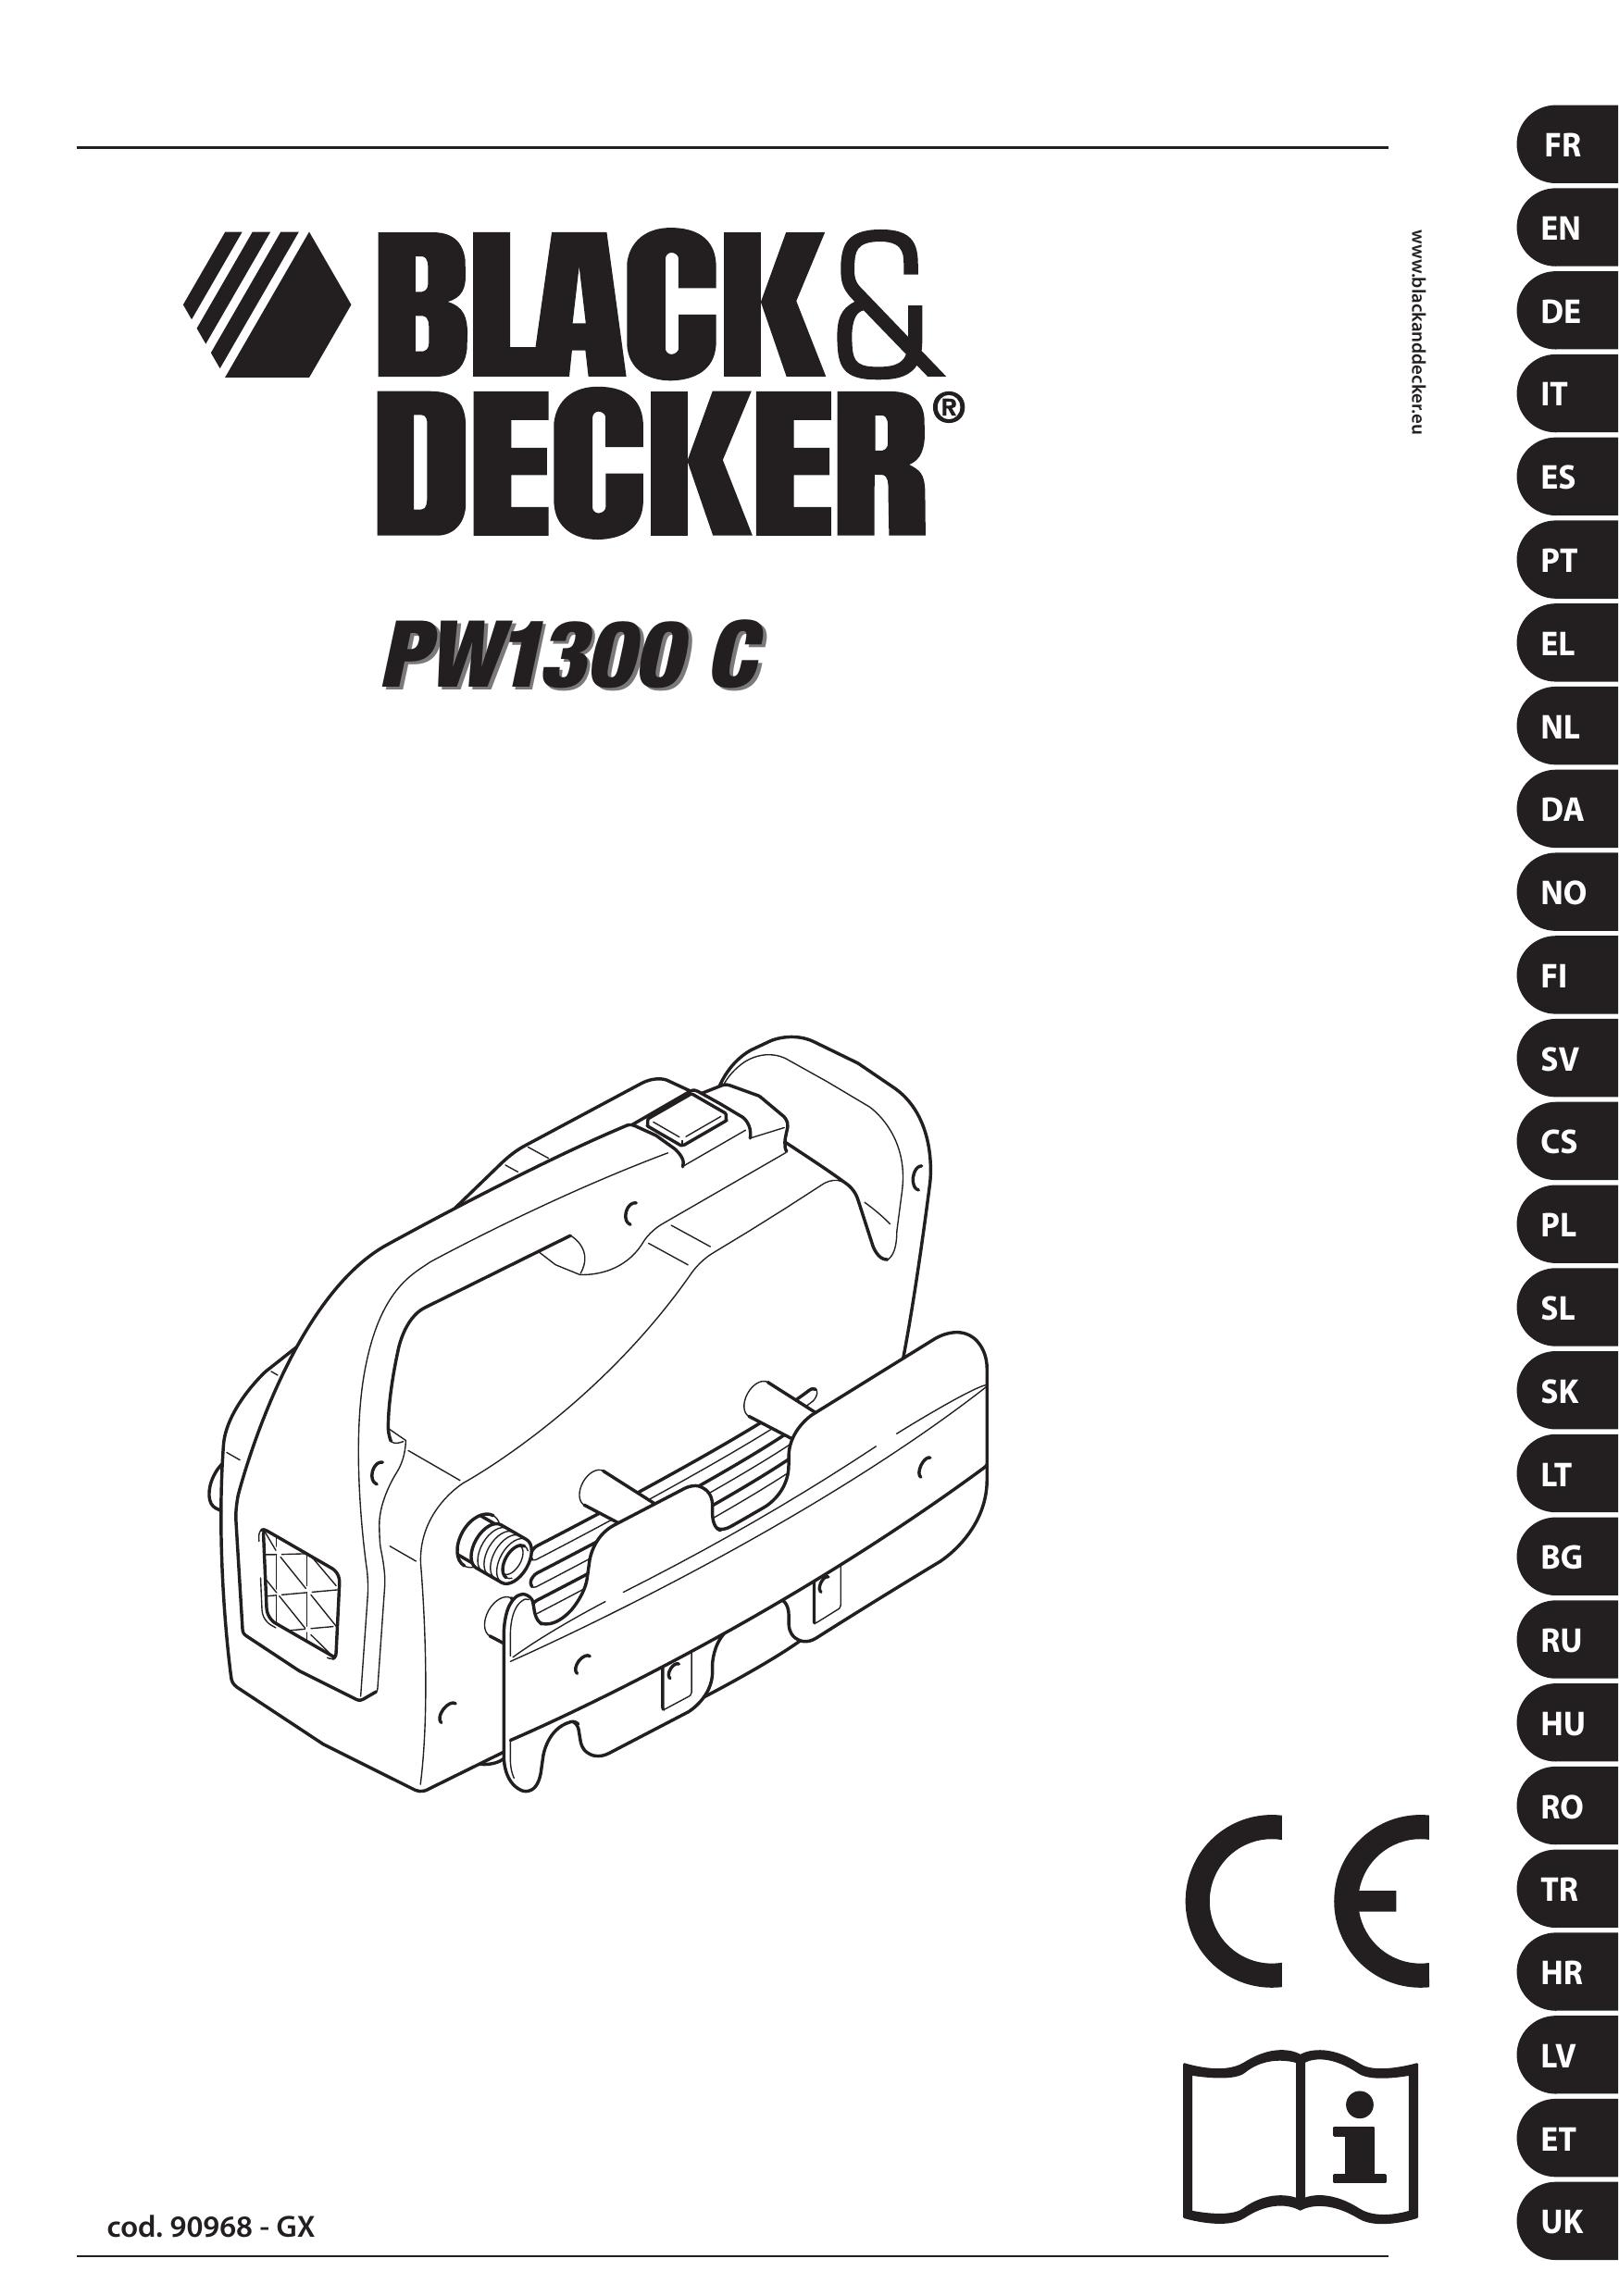 Black & Decker PW1300 Pressure Washer User Manual